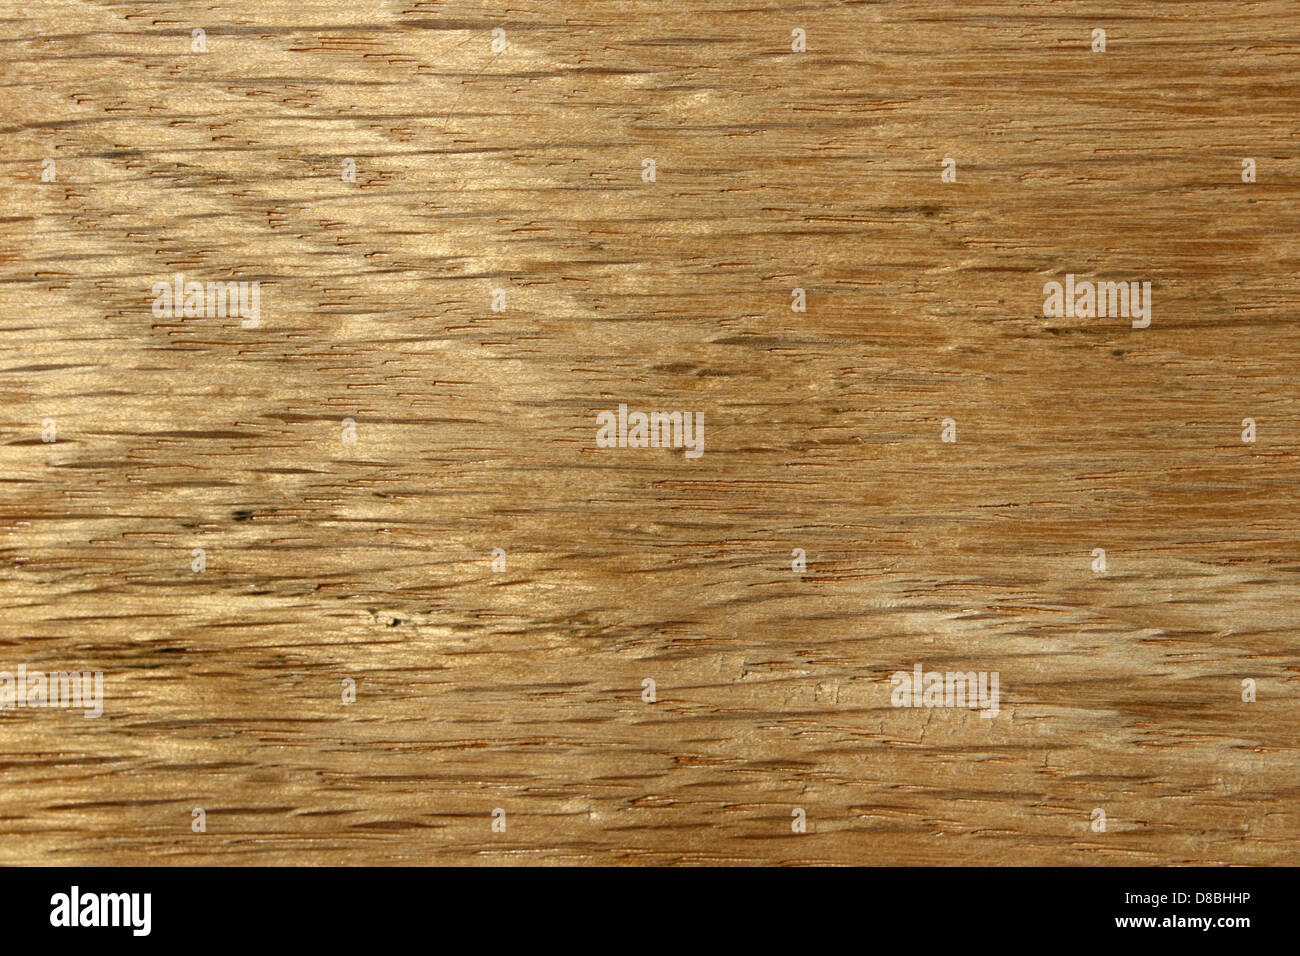 oak wood grain texture close up. Stock Photo